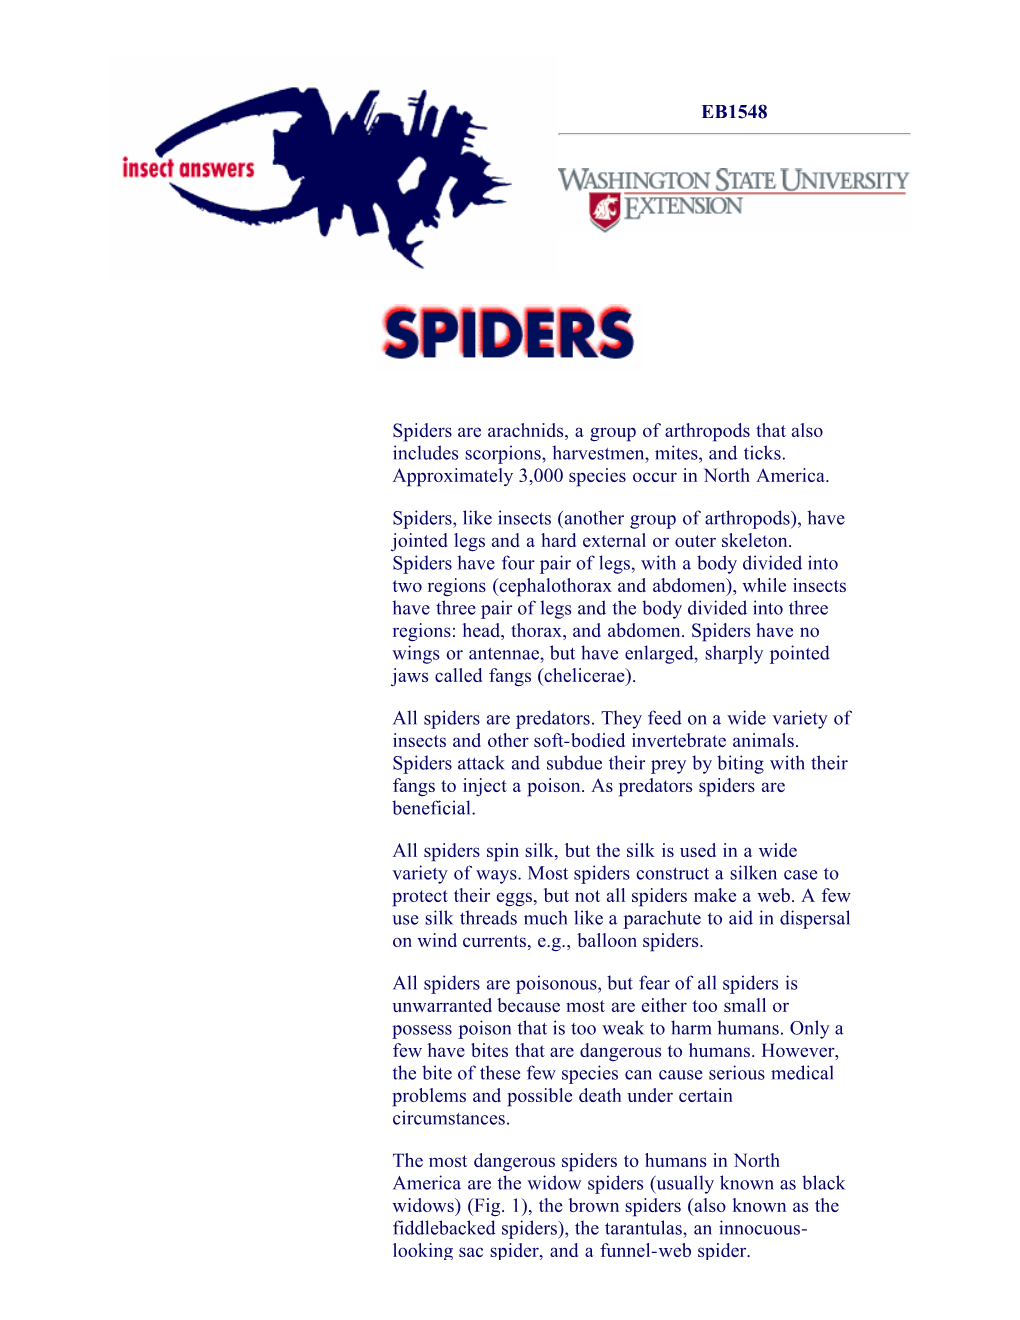 EB1548: Spiders